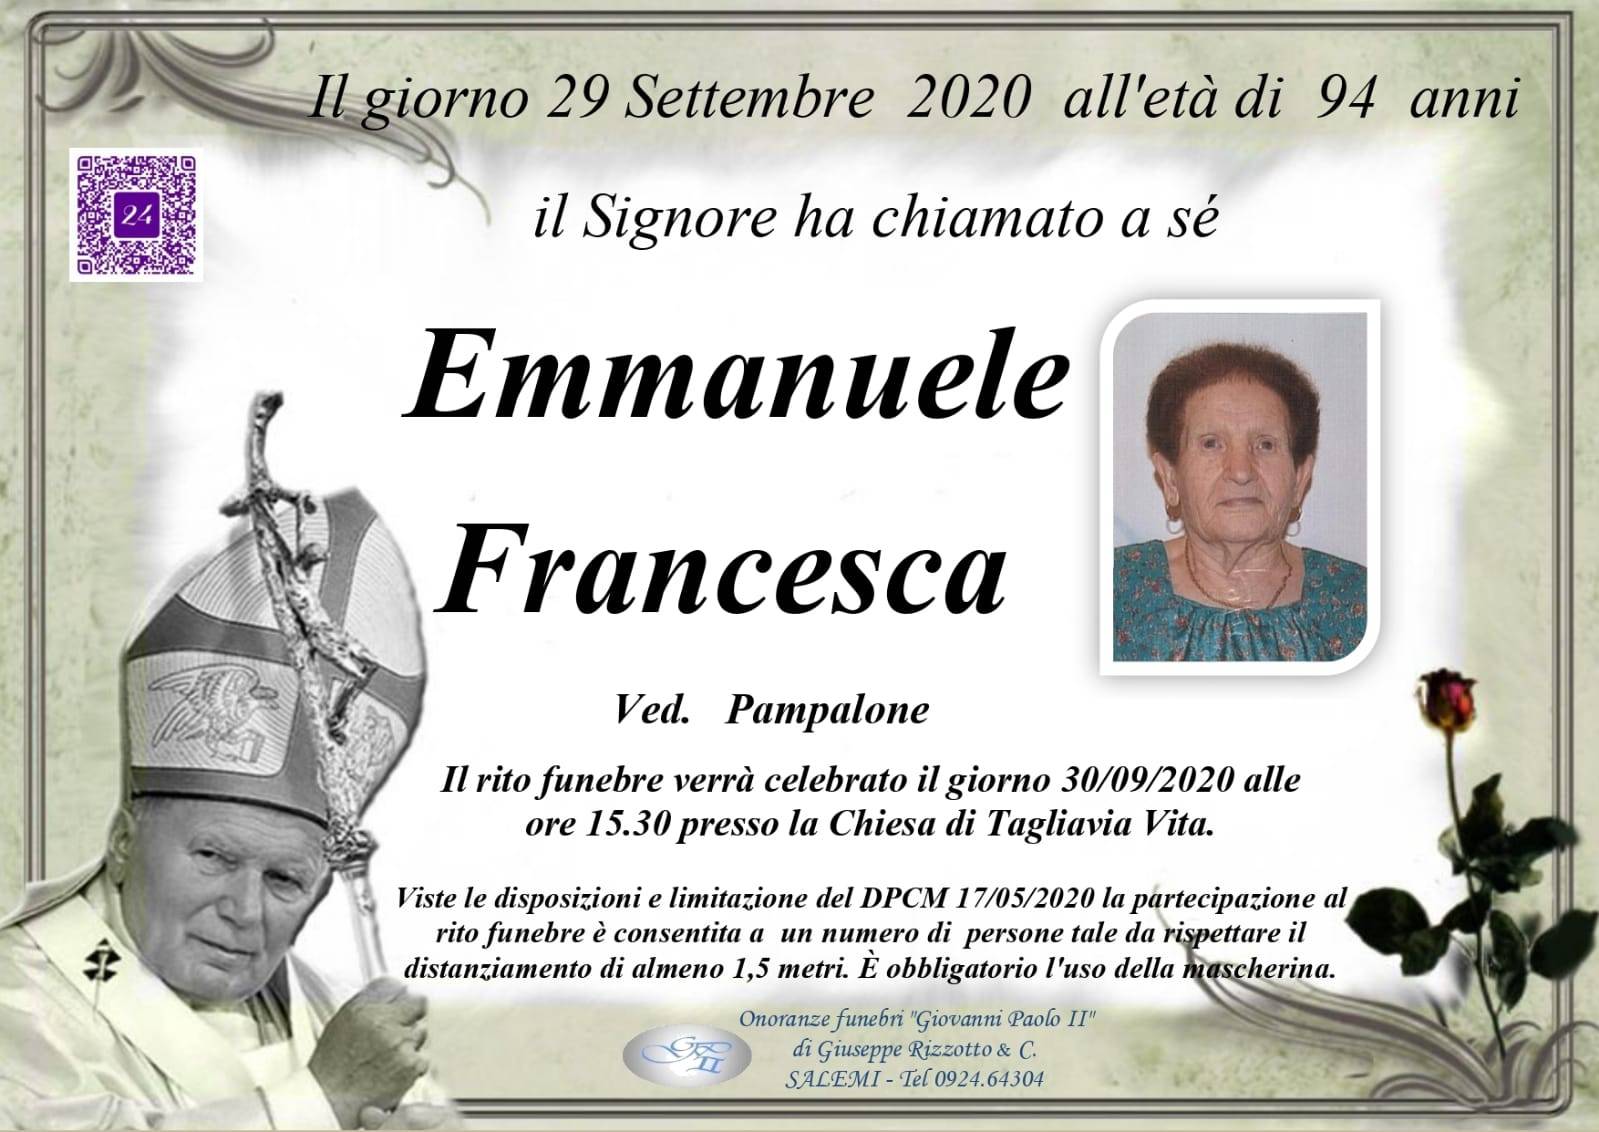 Francesca Emmanuele